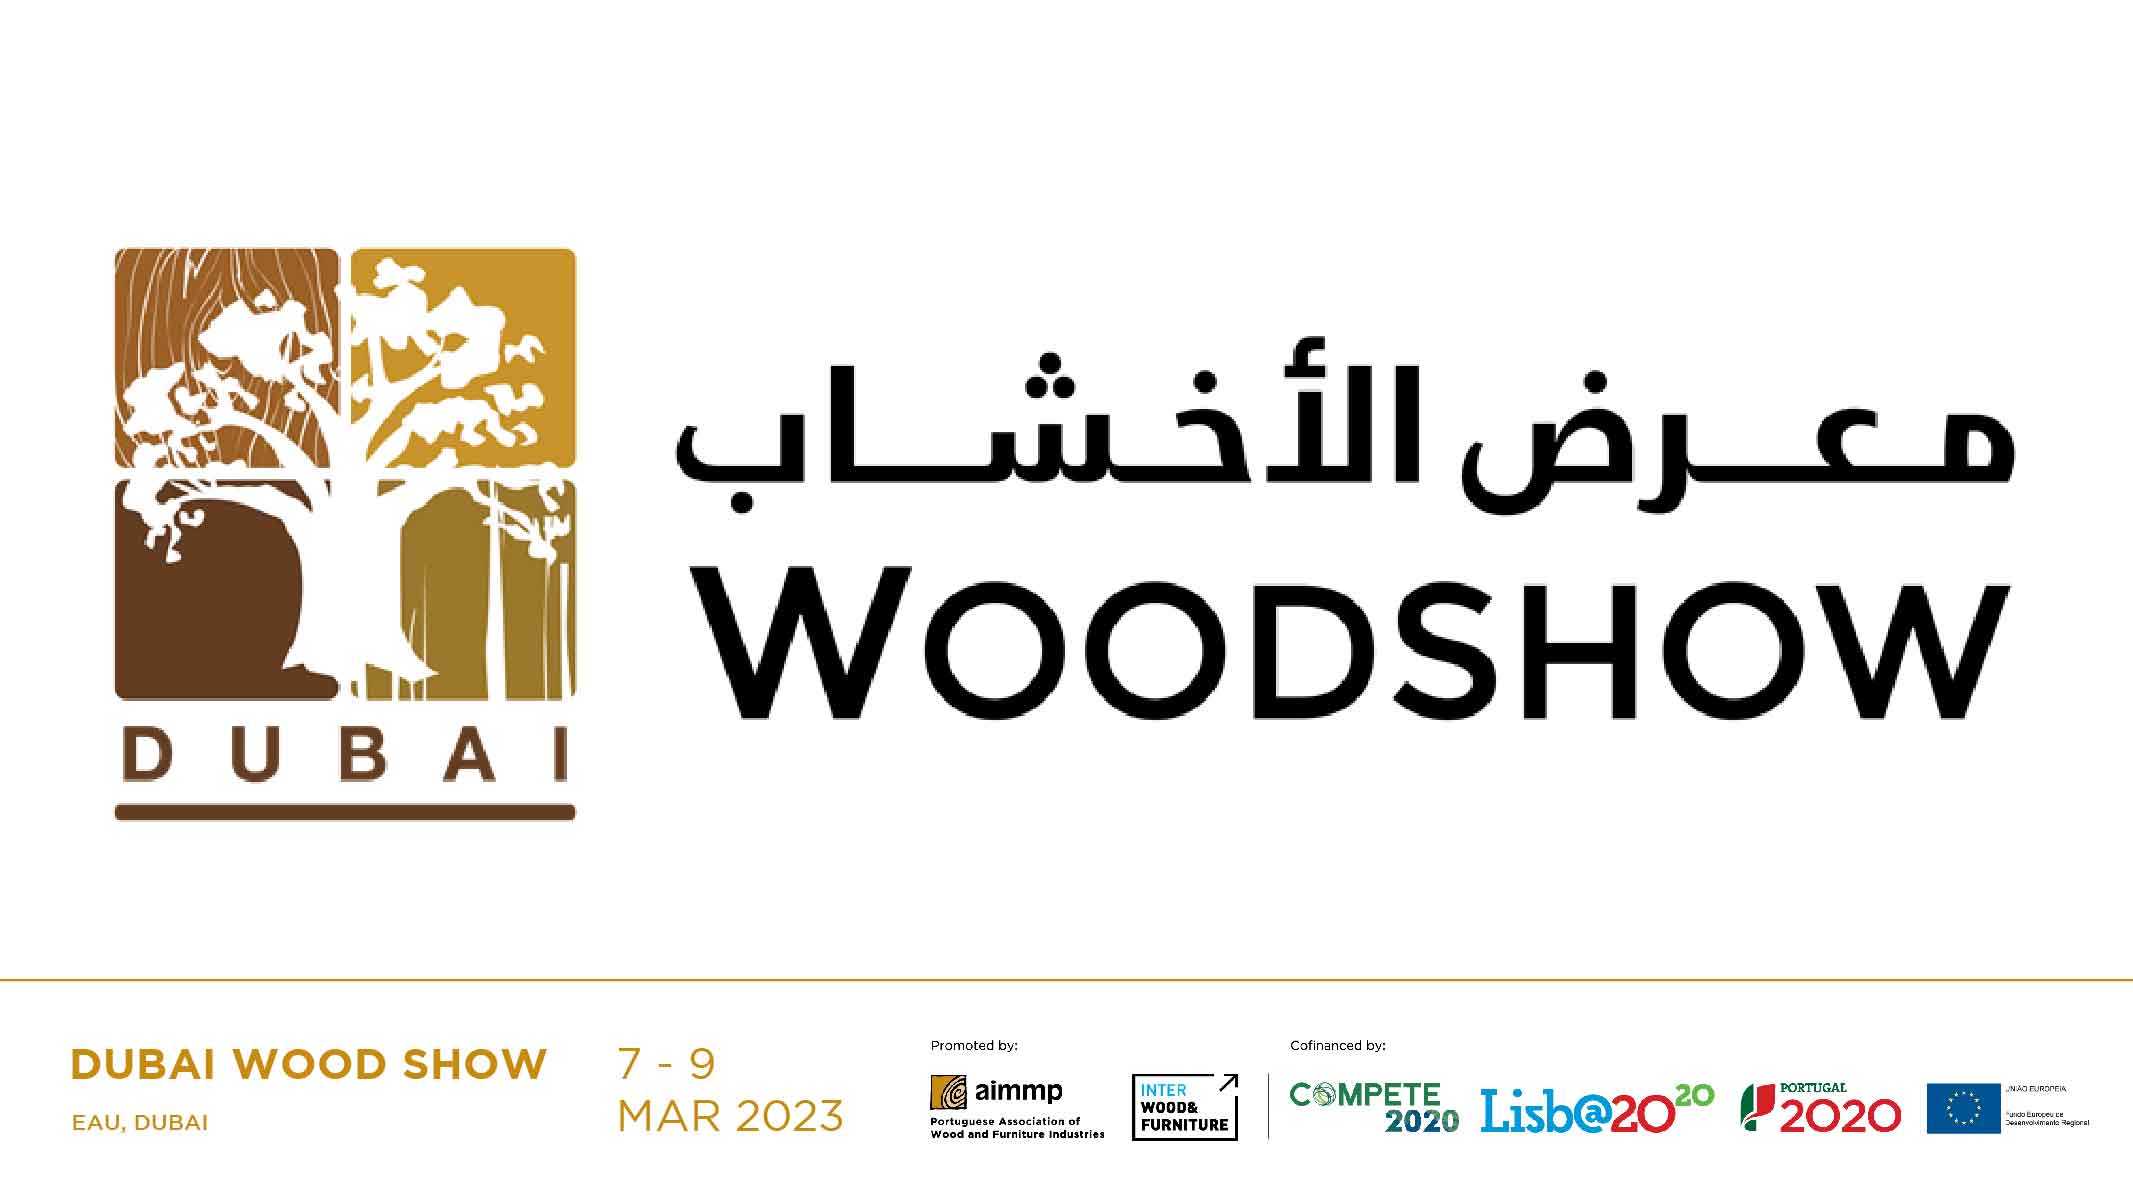 Dubai Wood Show 2023